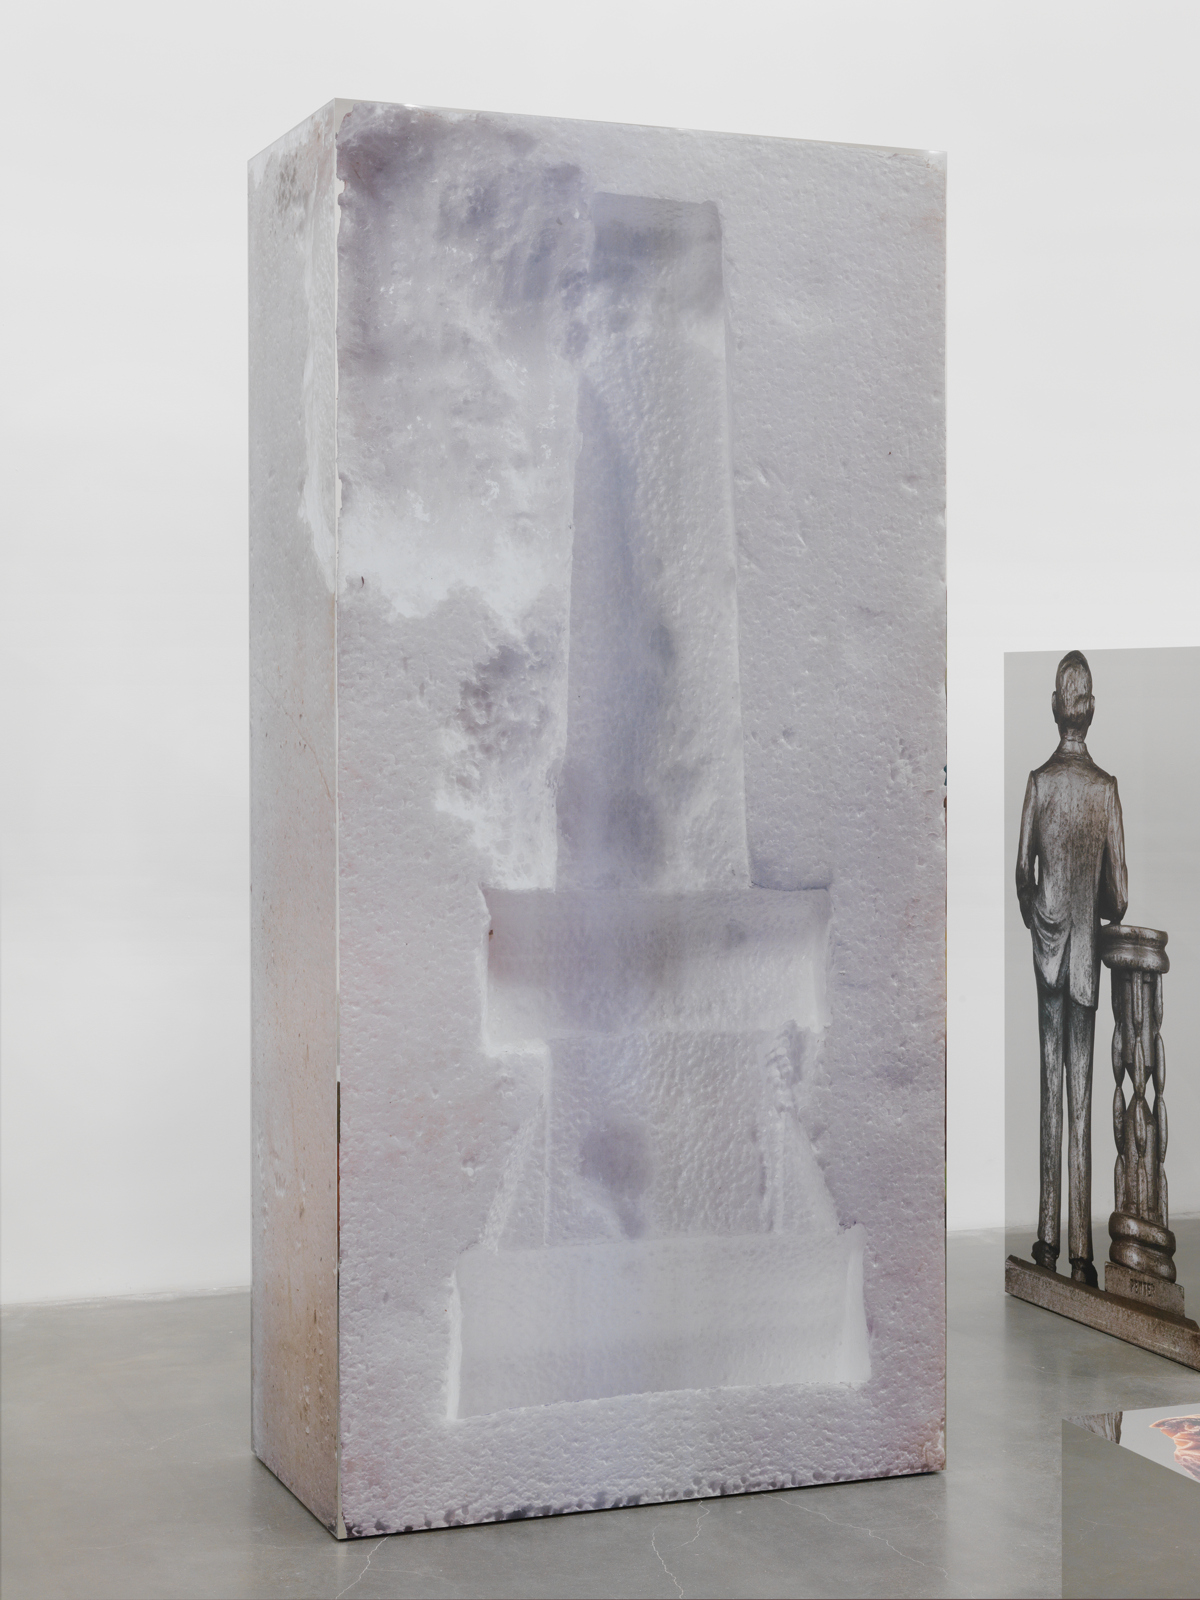 Urs Fischer / "Marguerite de Ponty", exhibition view, New Museum, NYC  / 2009